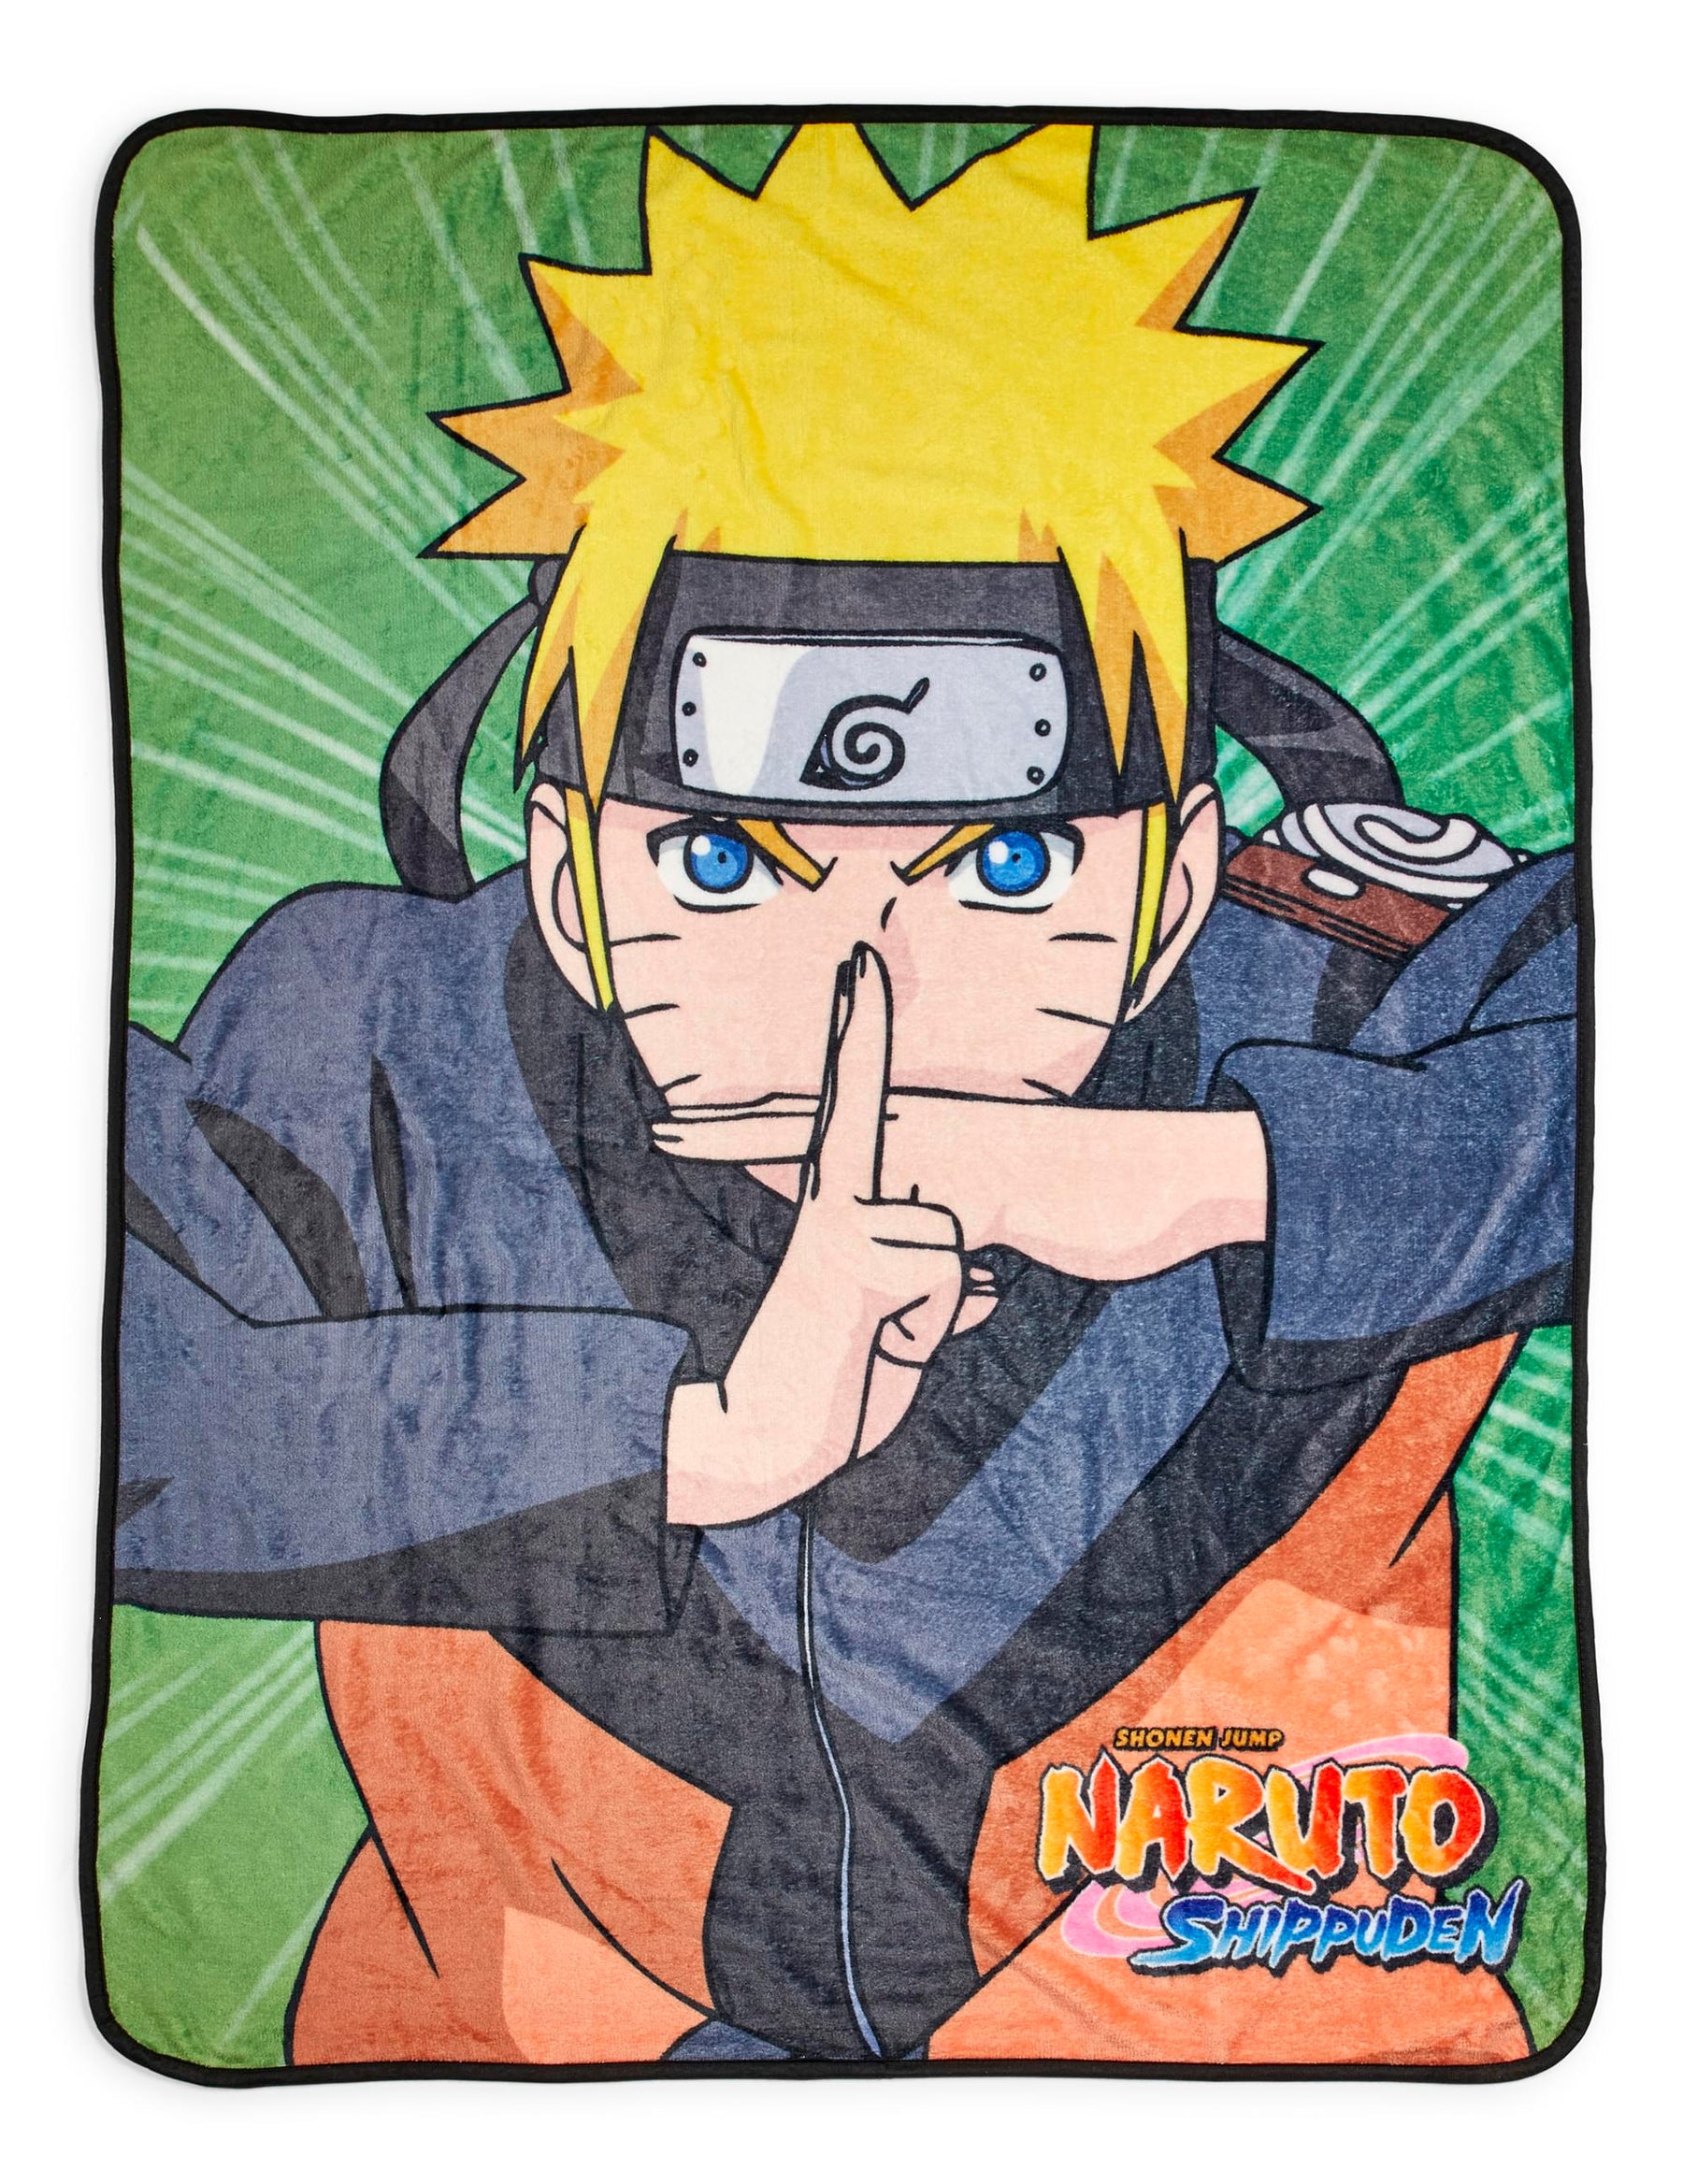 Naruto Shippuden Naruto Uzumaki Character Fleece Throw Blanket | 60 x 45 Inches